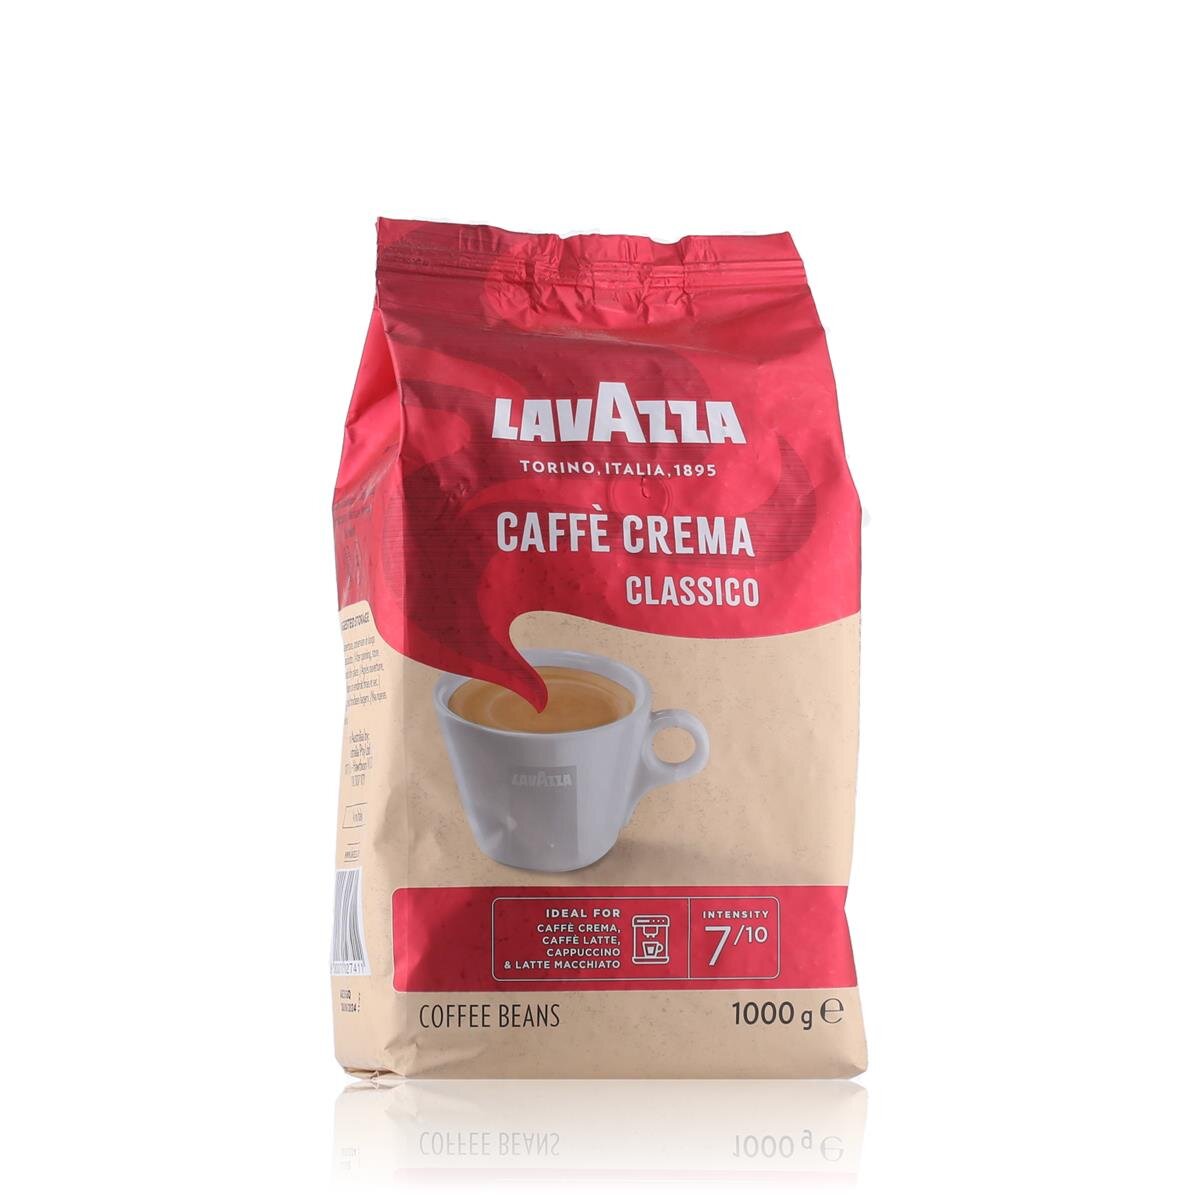 Lavazza Caffè Crema Classico 7/10 Kaffee ganze Bohnen 1kg, 12,99 €